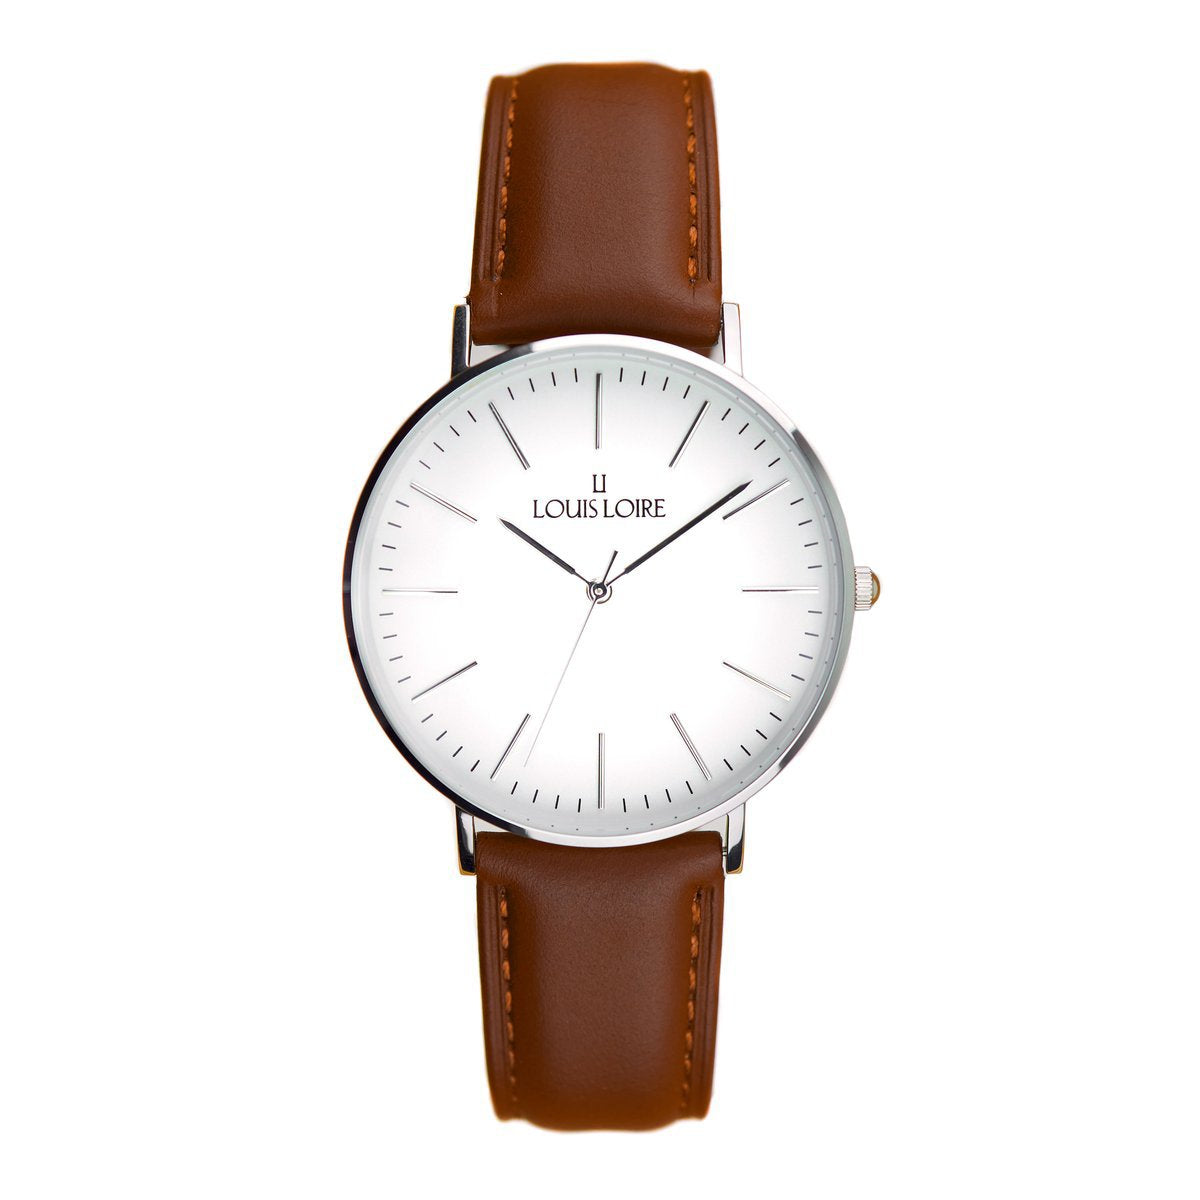 78 часы. Фирма изготавливающая часы Луар. Loire часы цена.